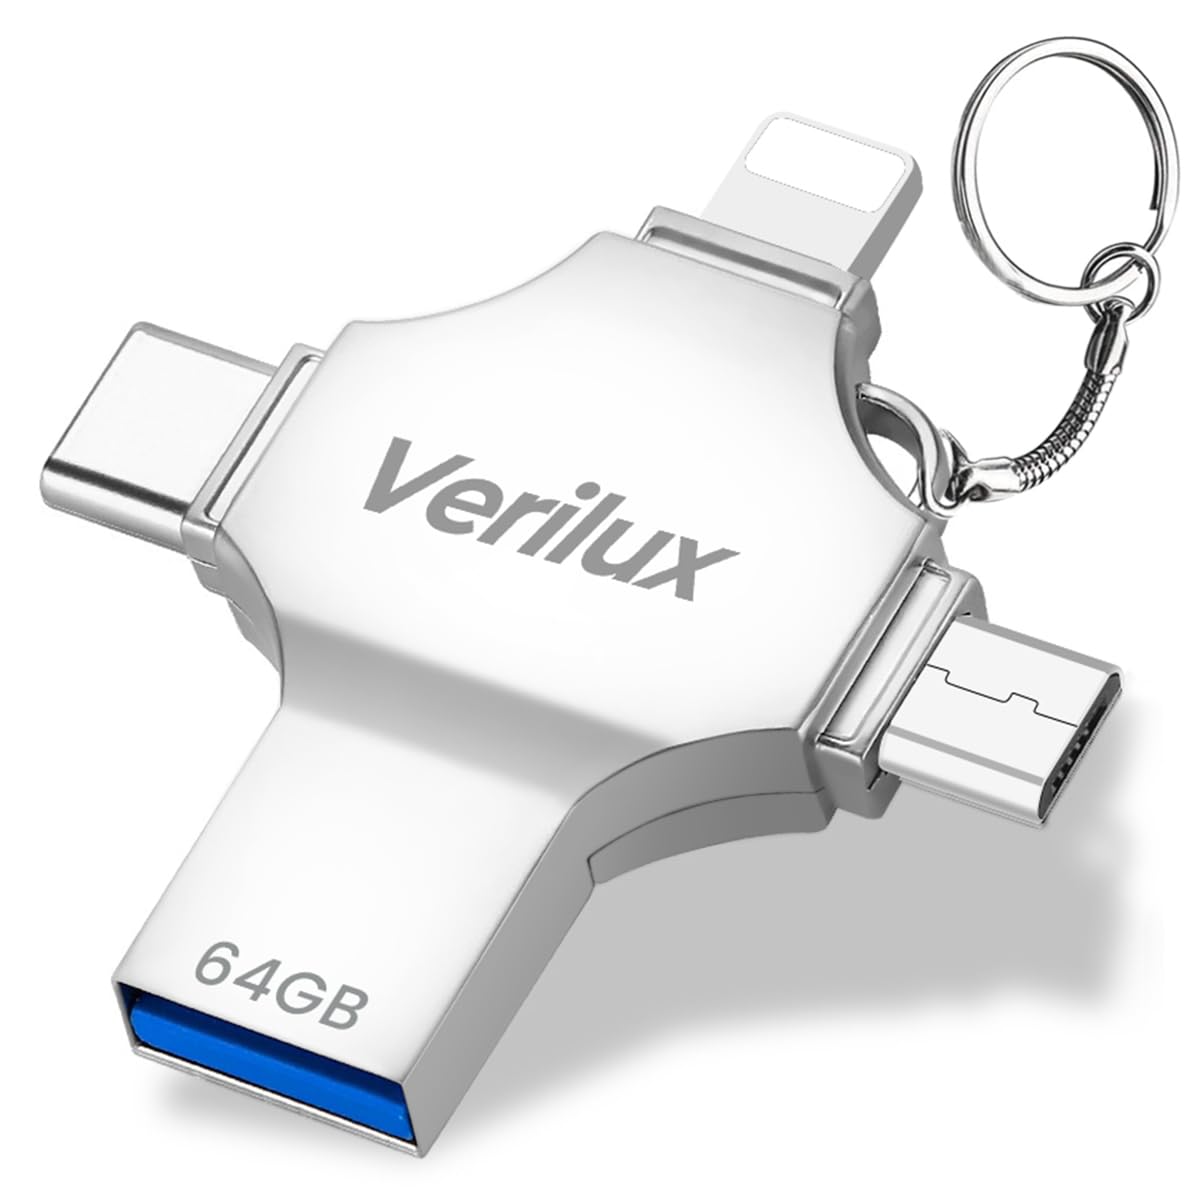 Verilux 4 in 1 Pendrive (64GB) - verilux